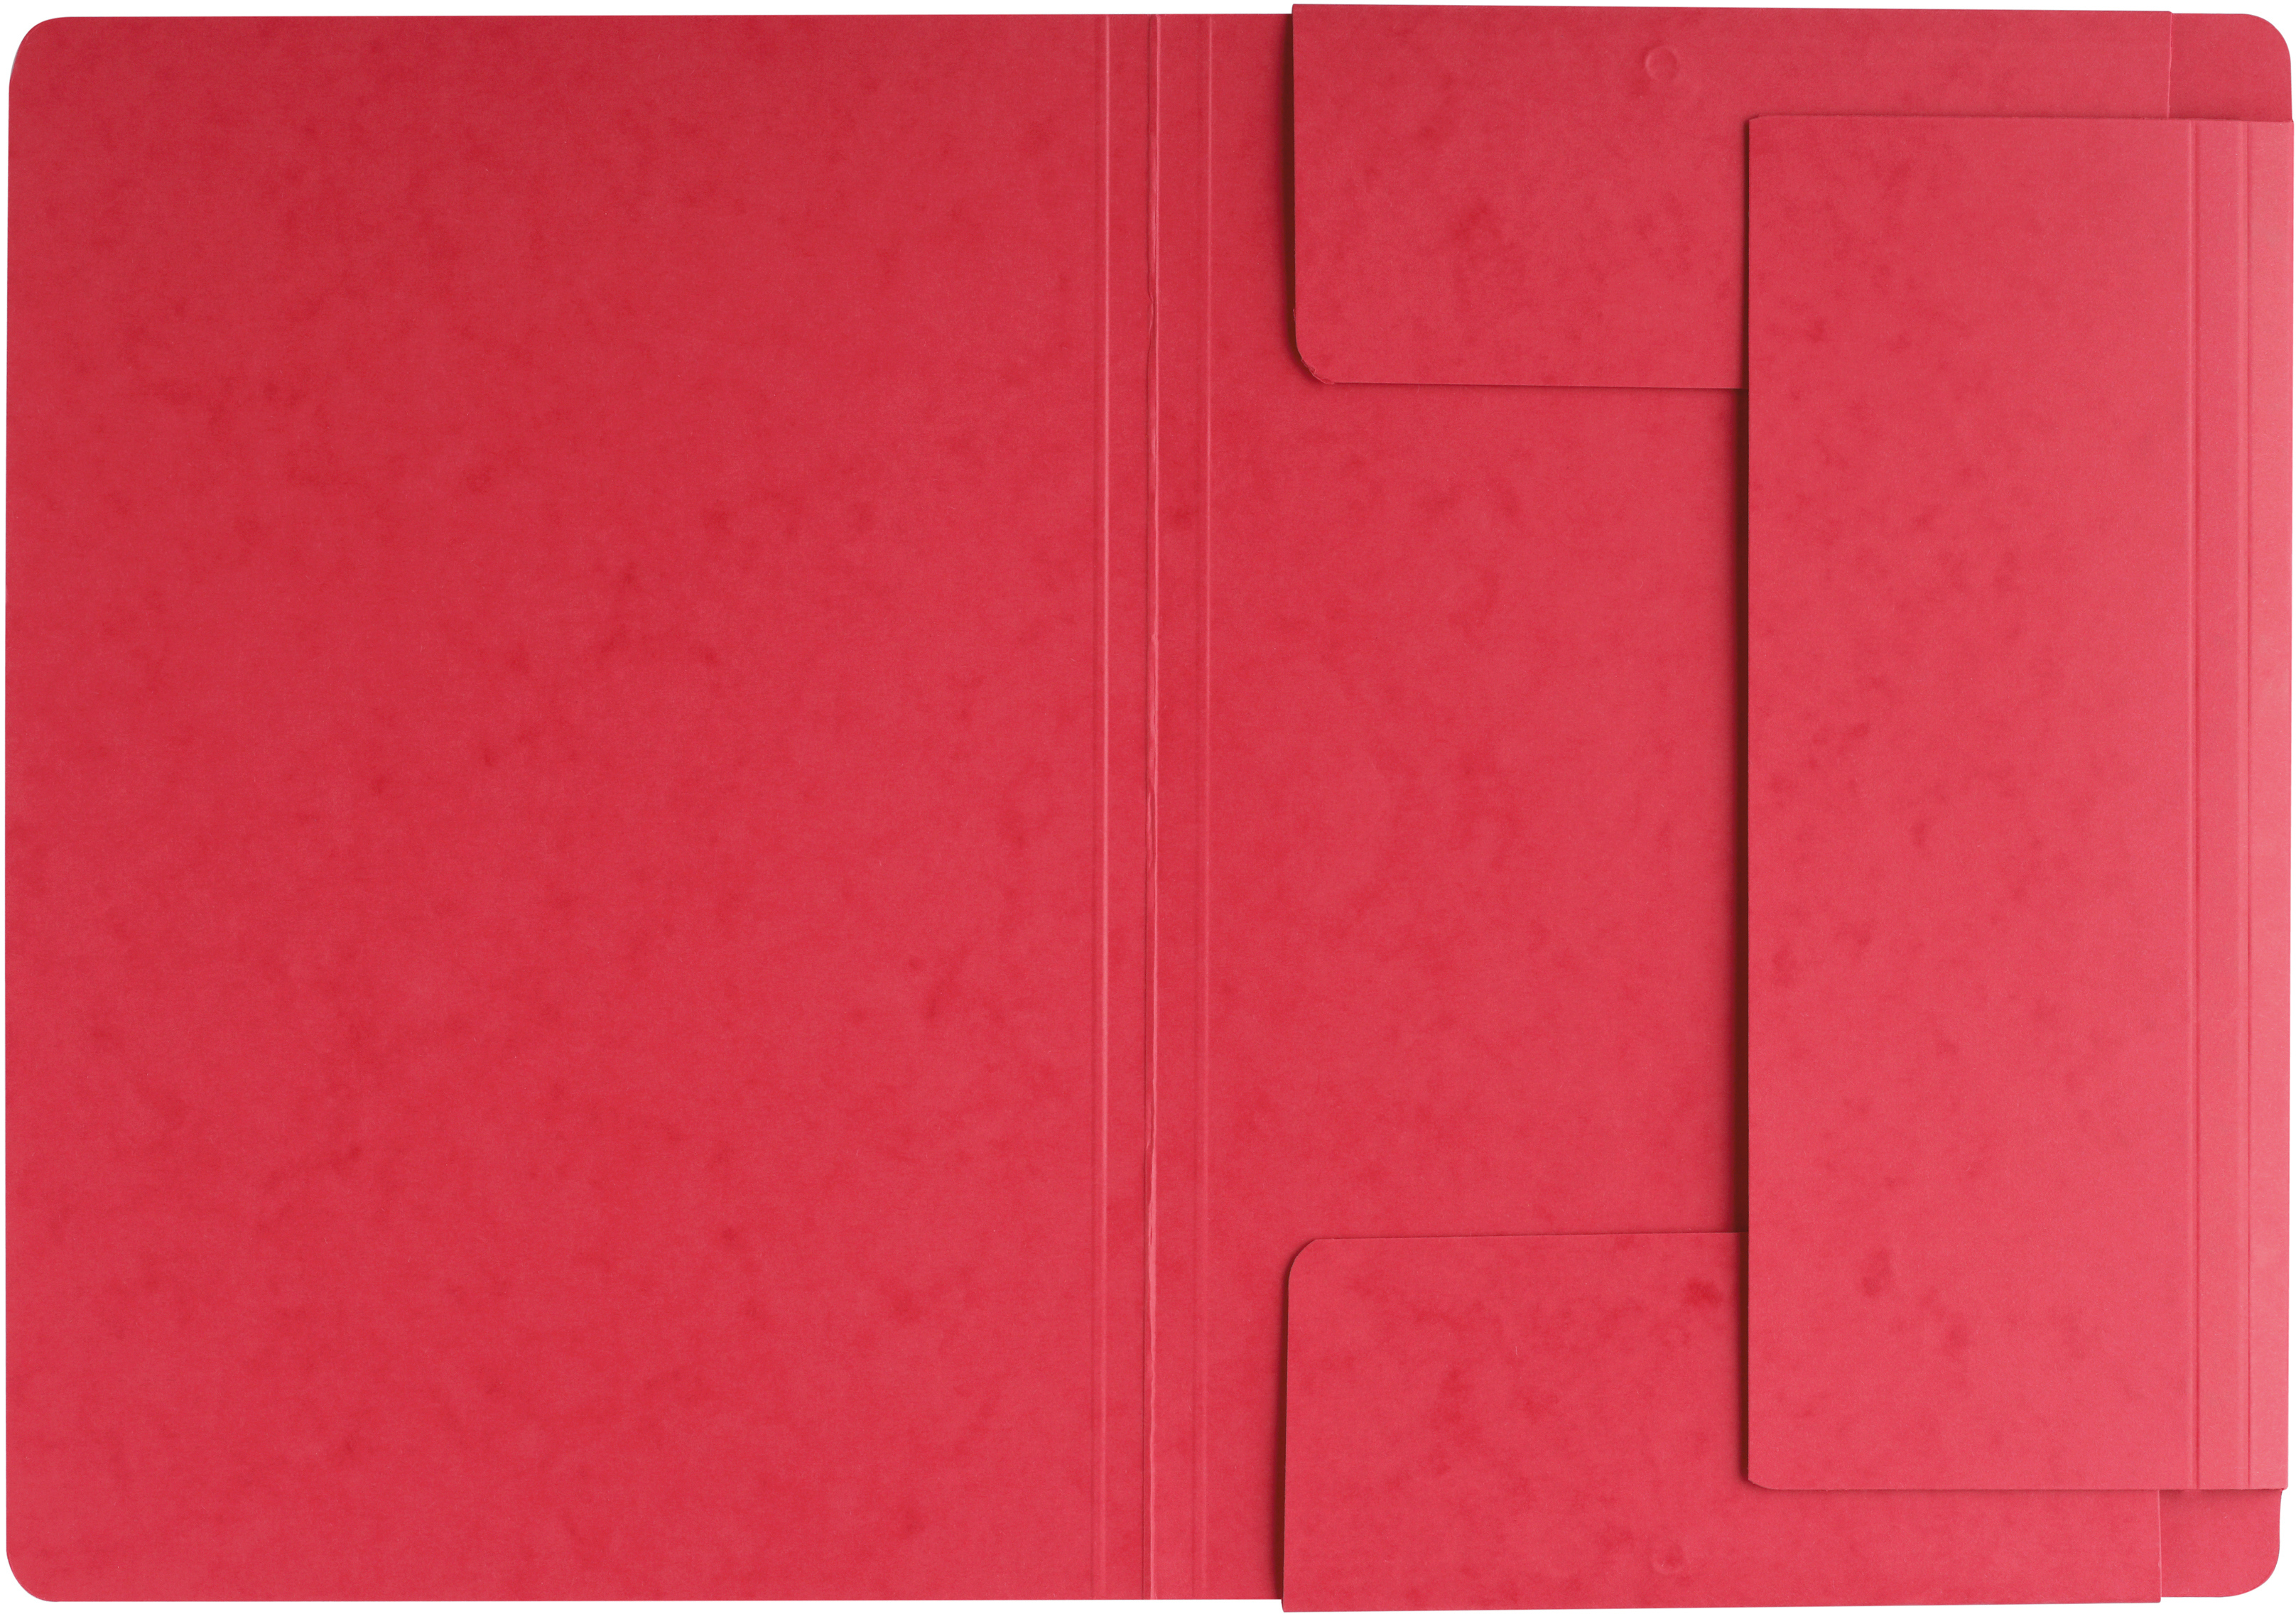 PAGNA Dossiers élastiques A4 24007-01 rouge